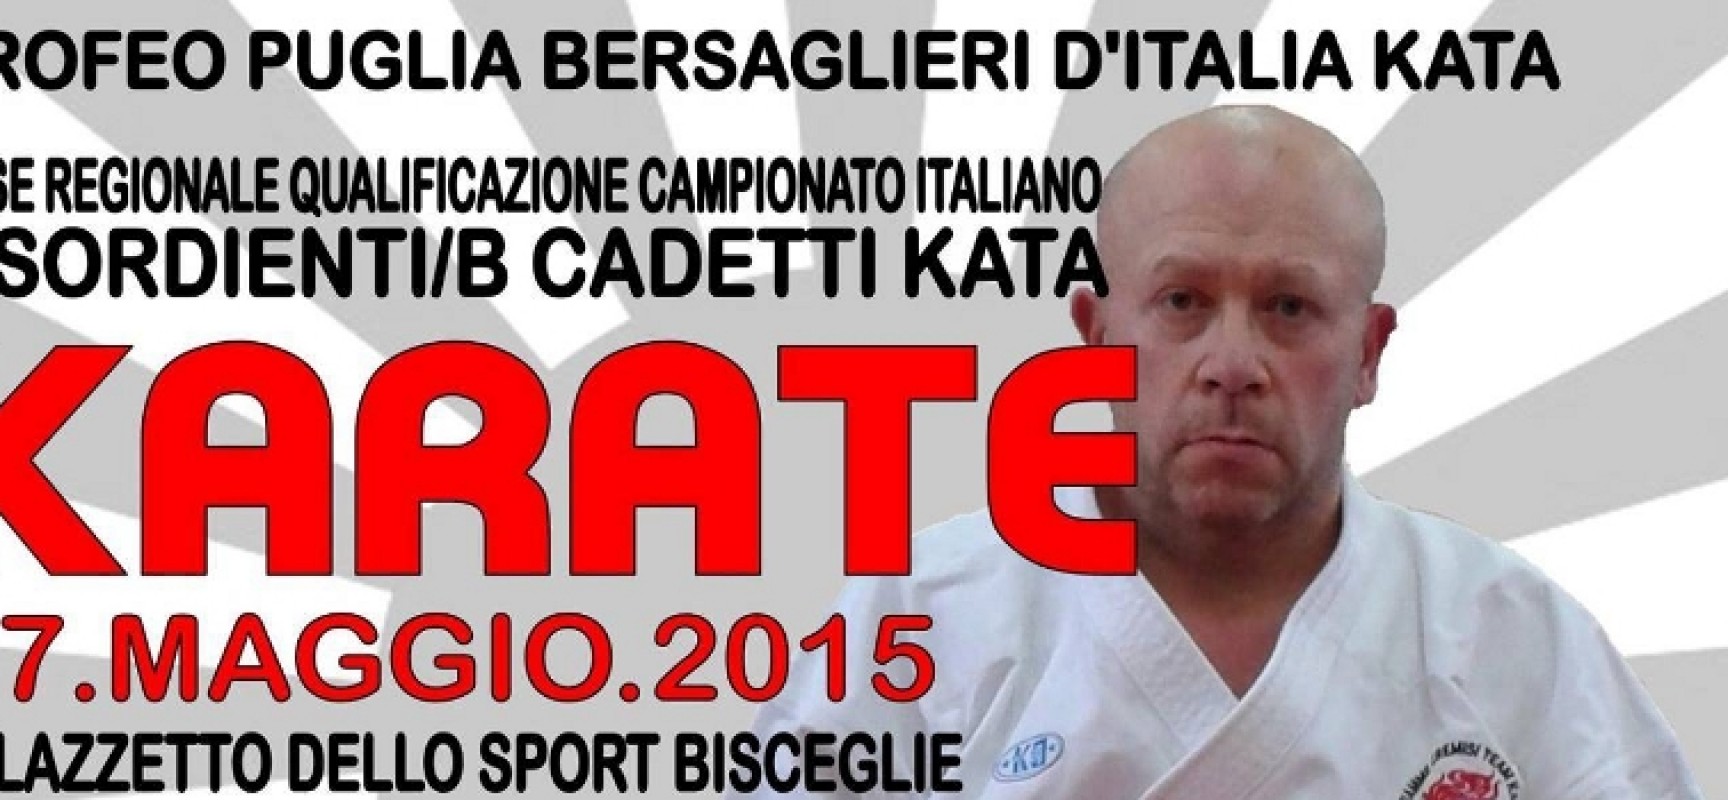 Karate, domenica al PalaDolmen c’è il “Trofeo Puglia Bersaglieri d’Italia 2015”